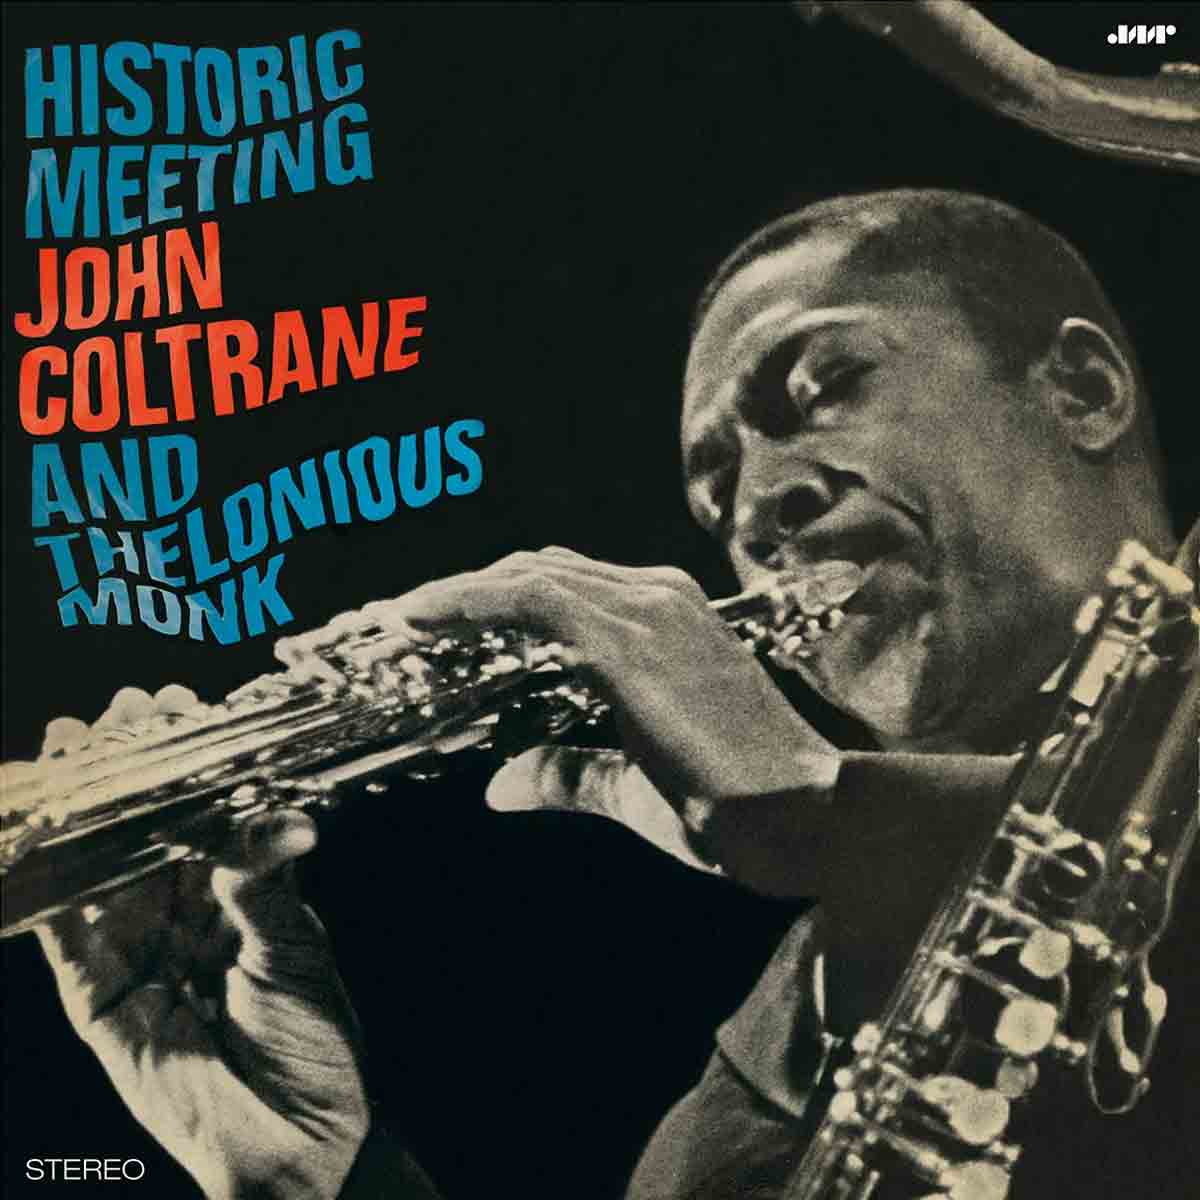 Historic Meeting John Coltrane And Thelonious Monk